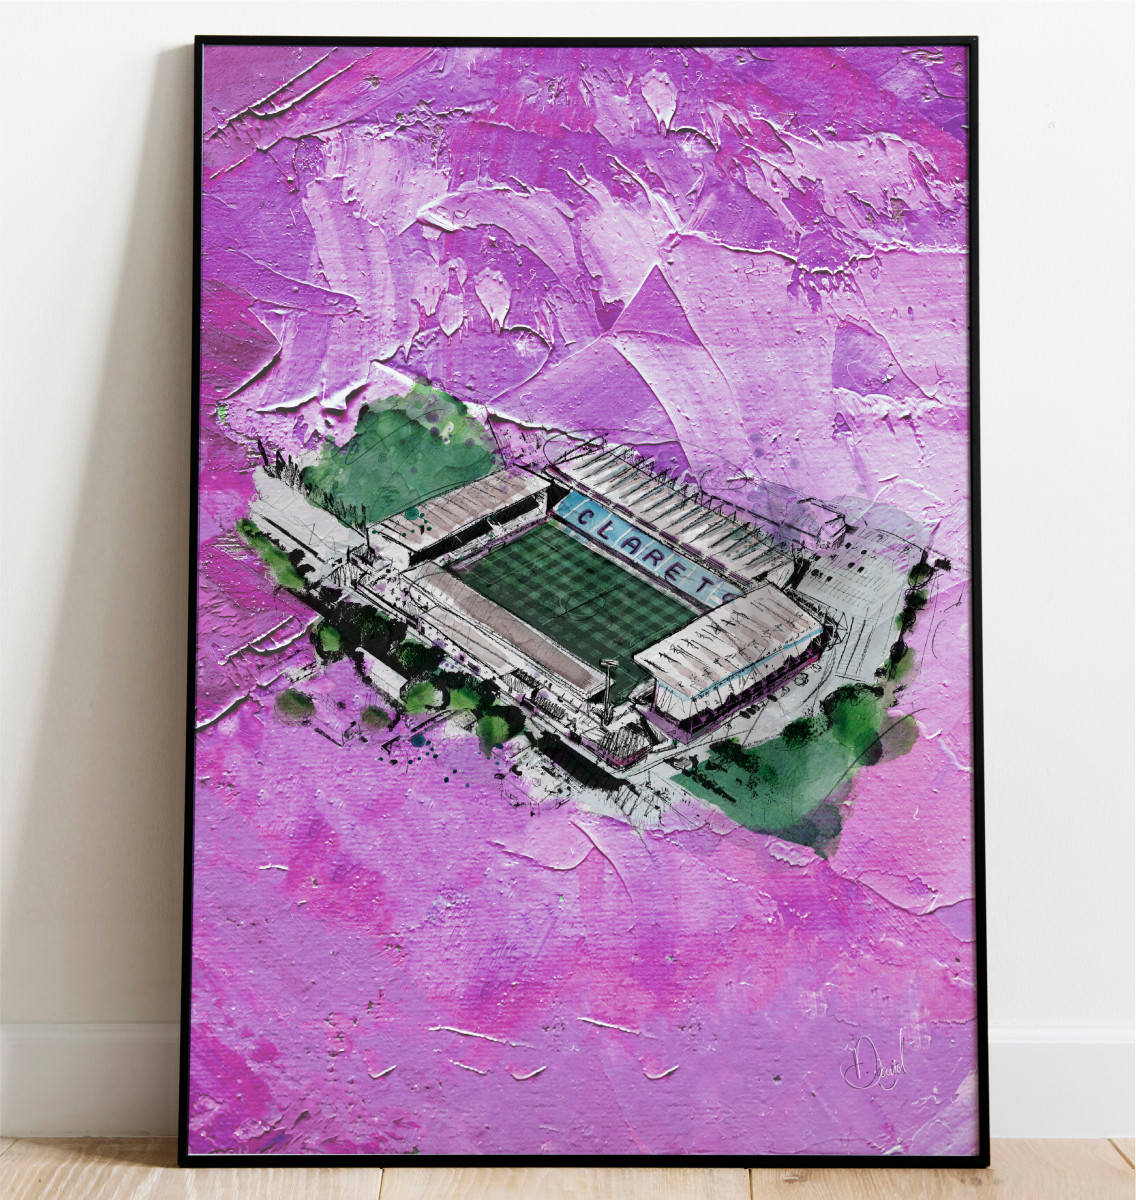 Burnley FC - Turf Moor on oil, special edition art print